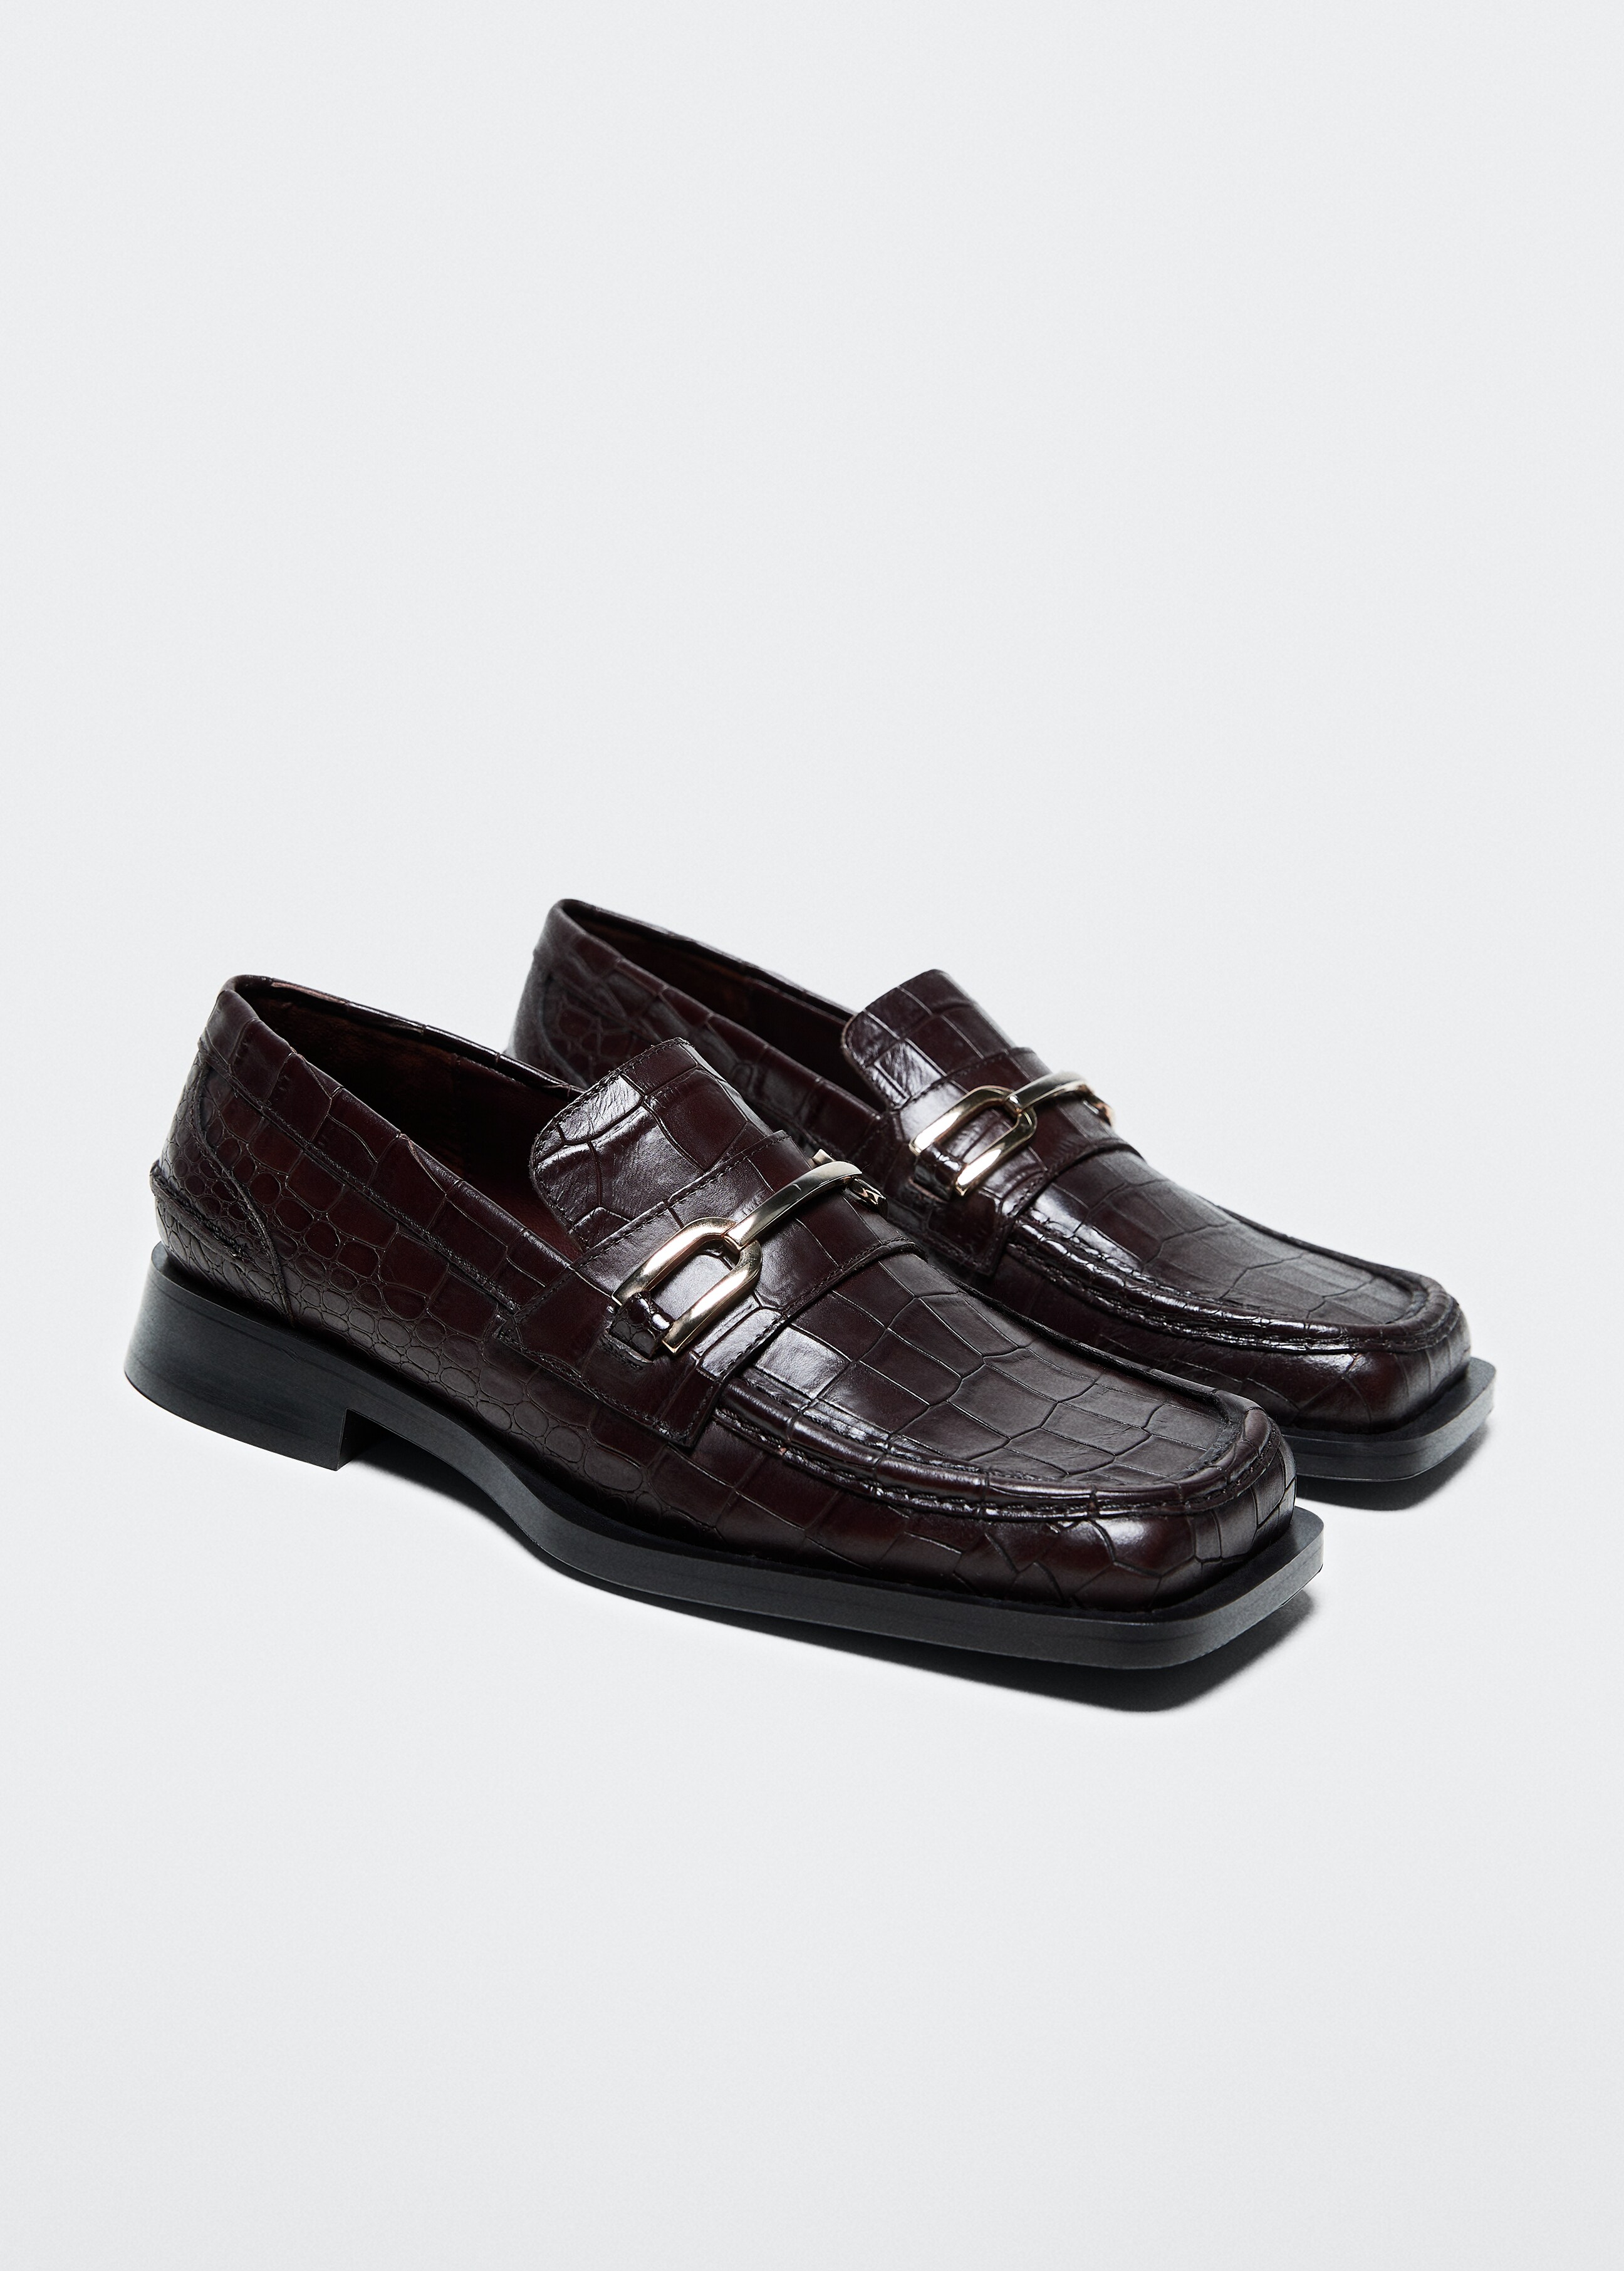 Square-toe leather loafers - Medium plane